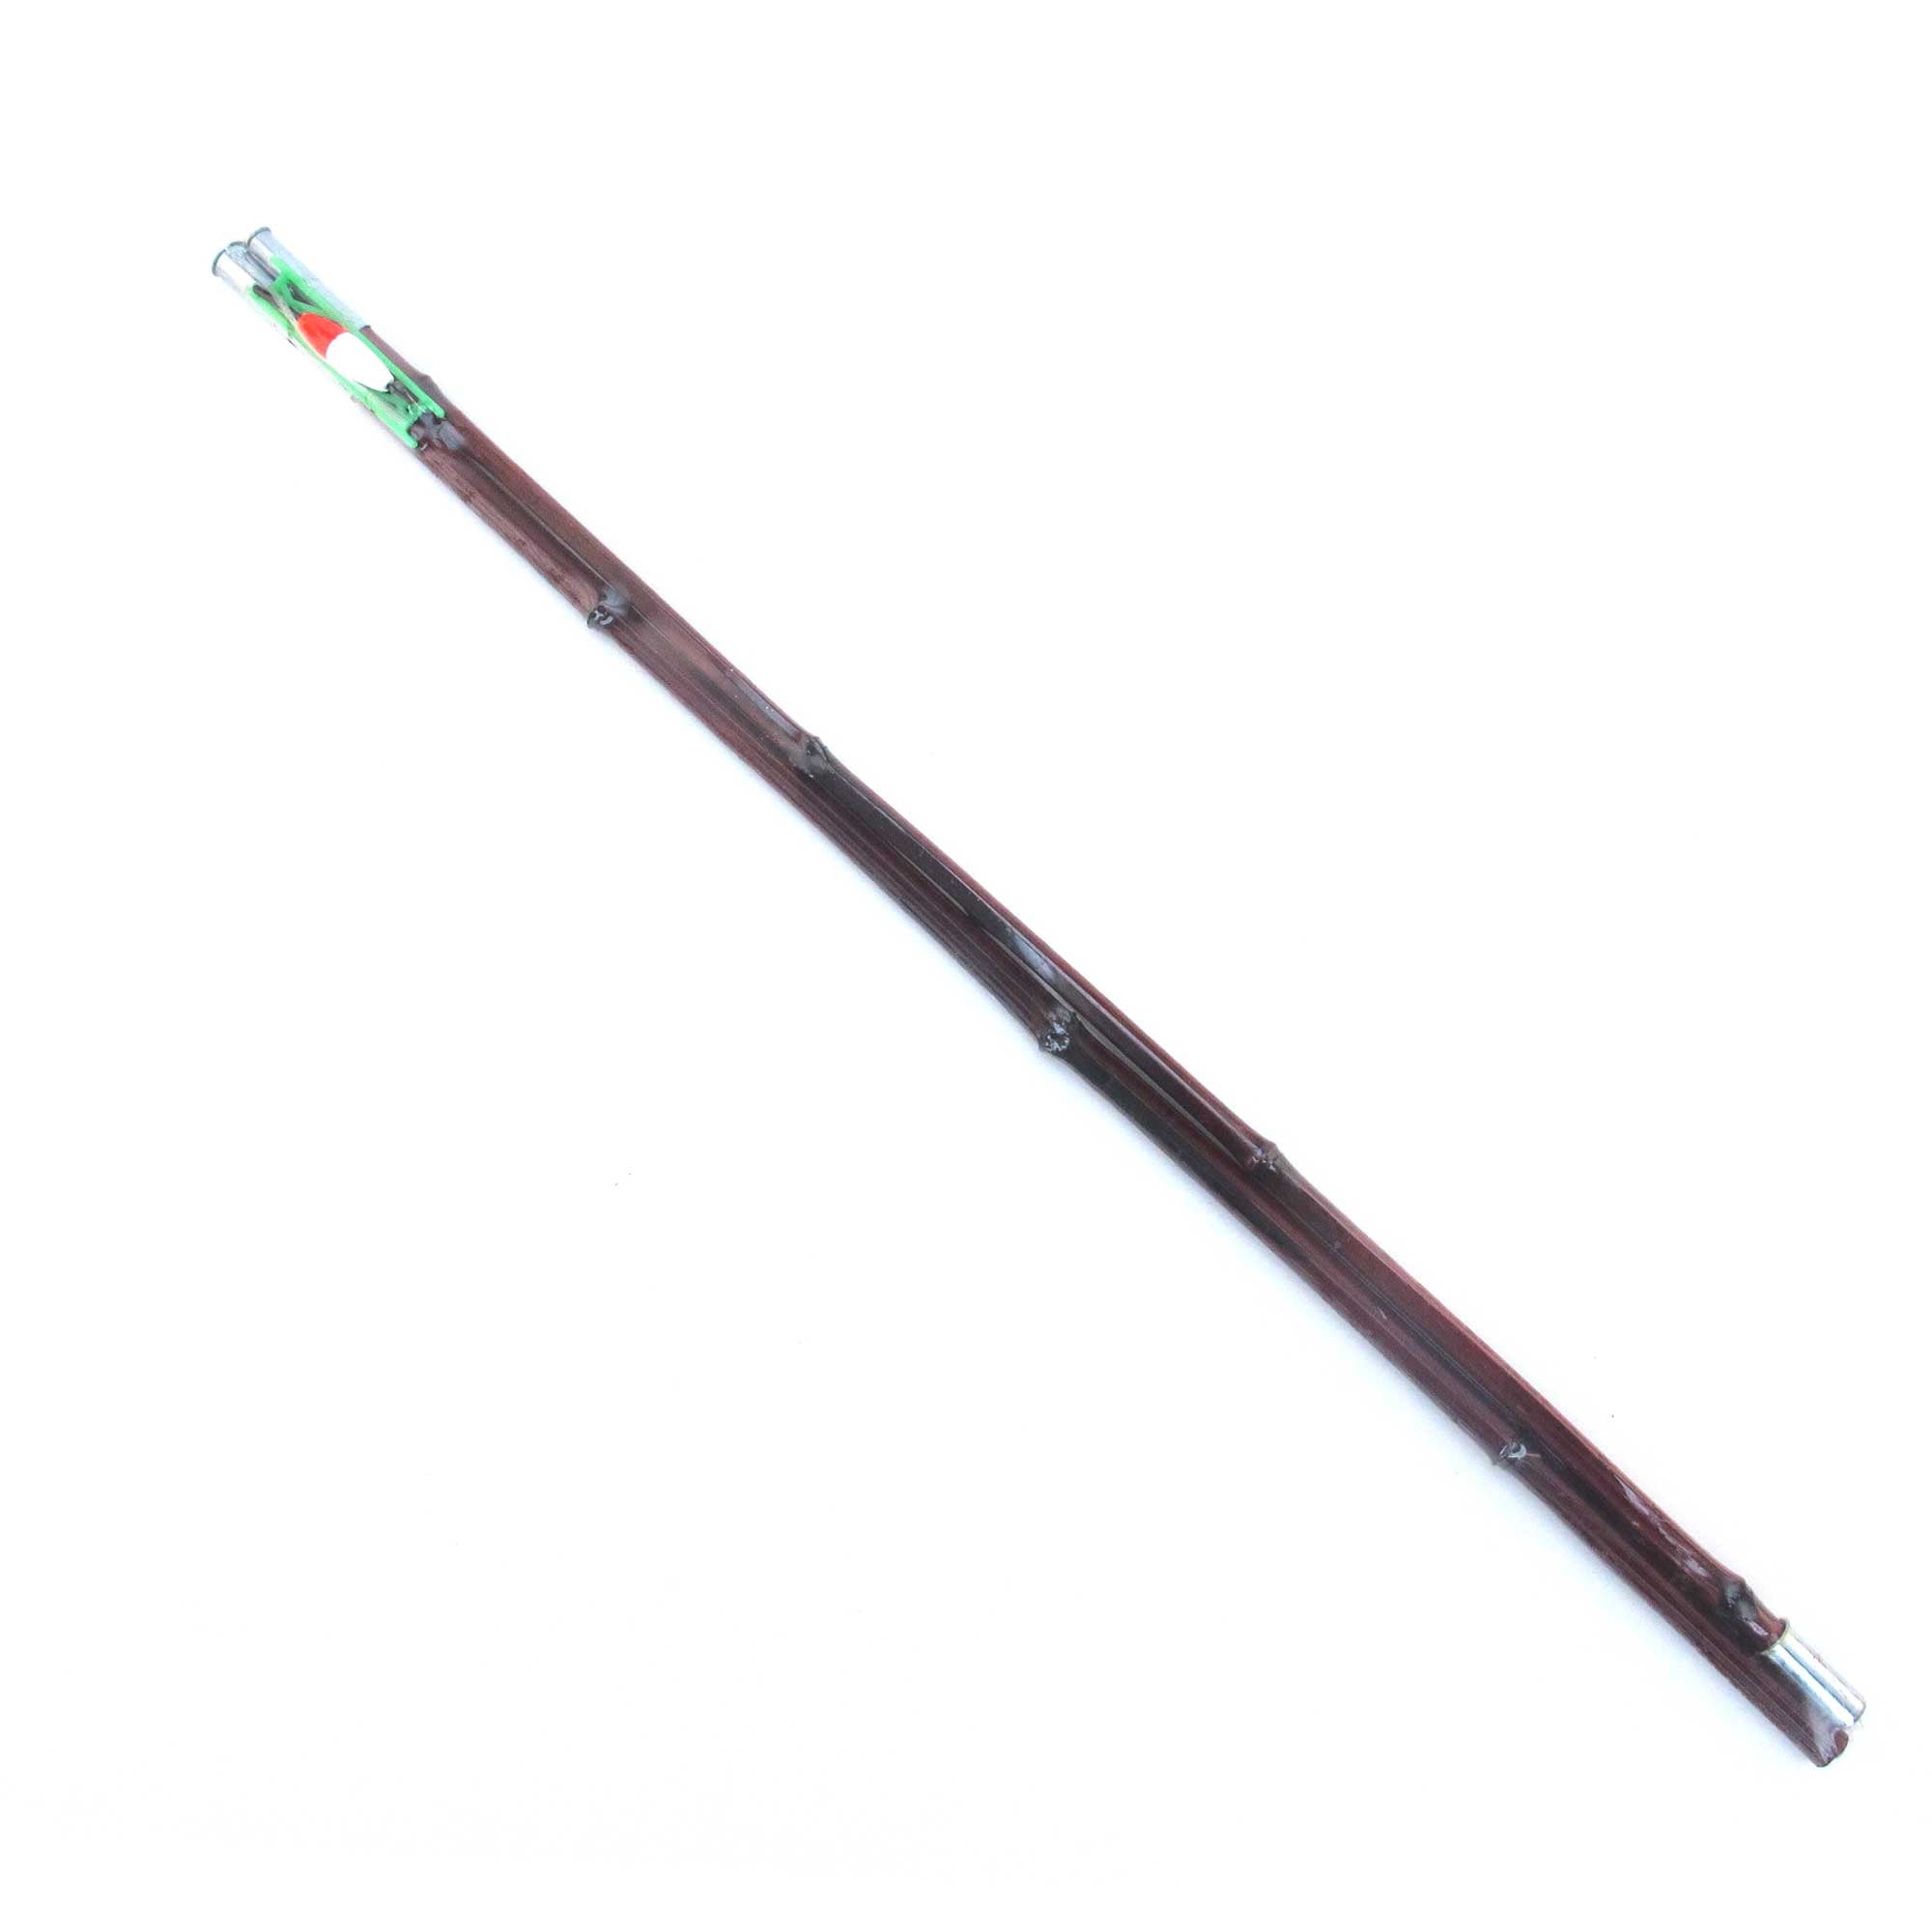 Bamboo Cane Fishing Pole w/ Bobber, Hook, Line, Sinker - 3 -piece